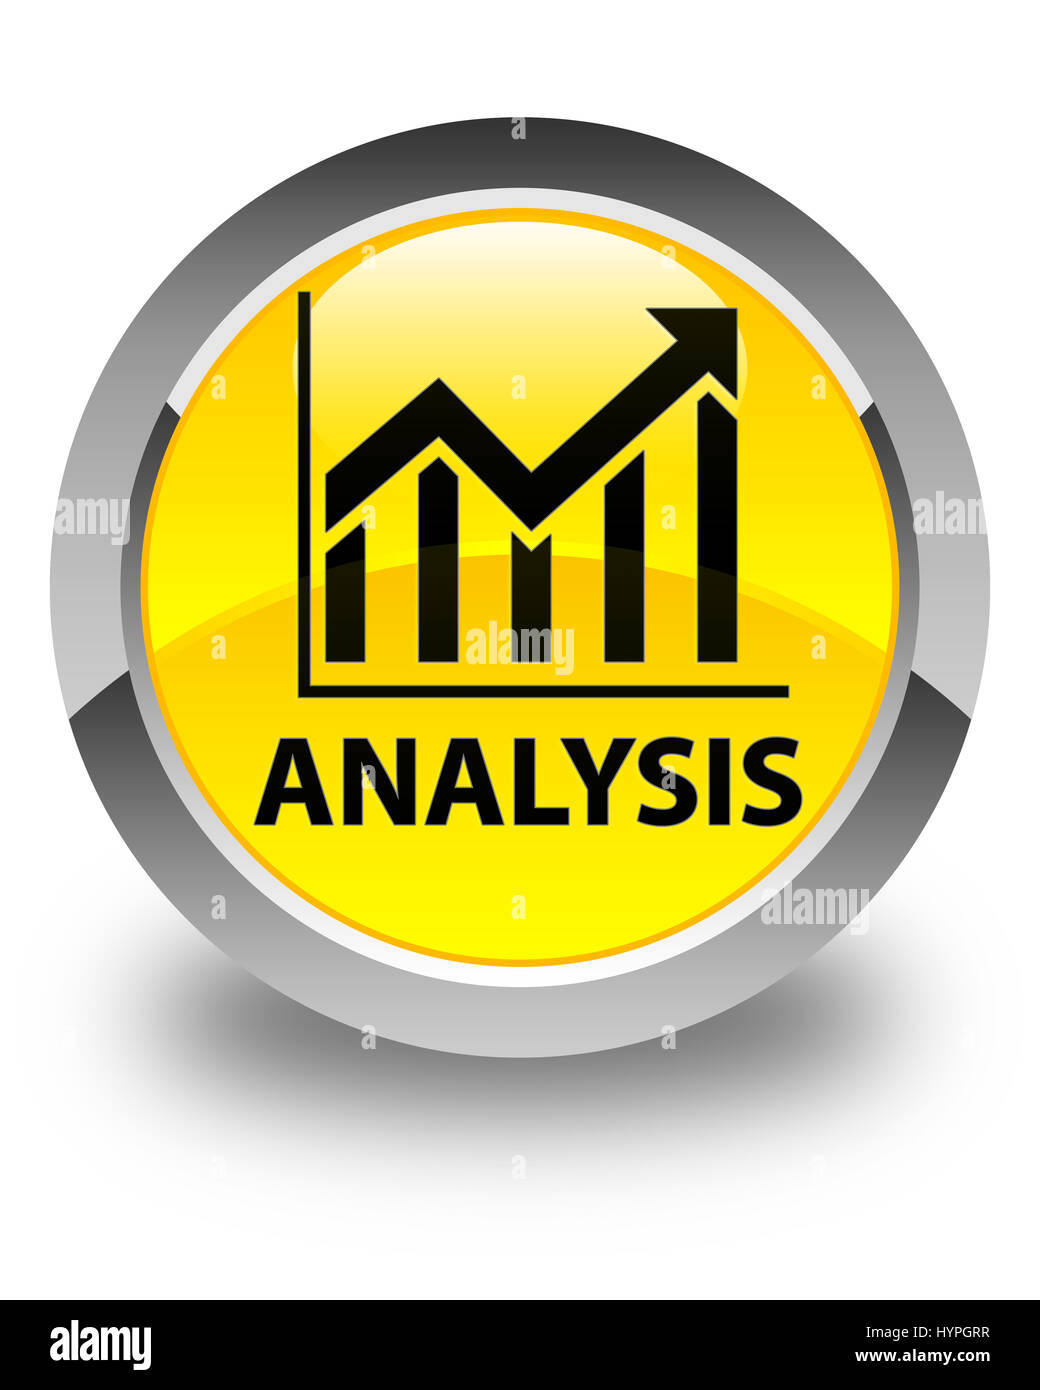 (Icône) Analyse statistique isolé sur jaune brillant bouton rond abstract illustration Banque D'Images